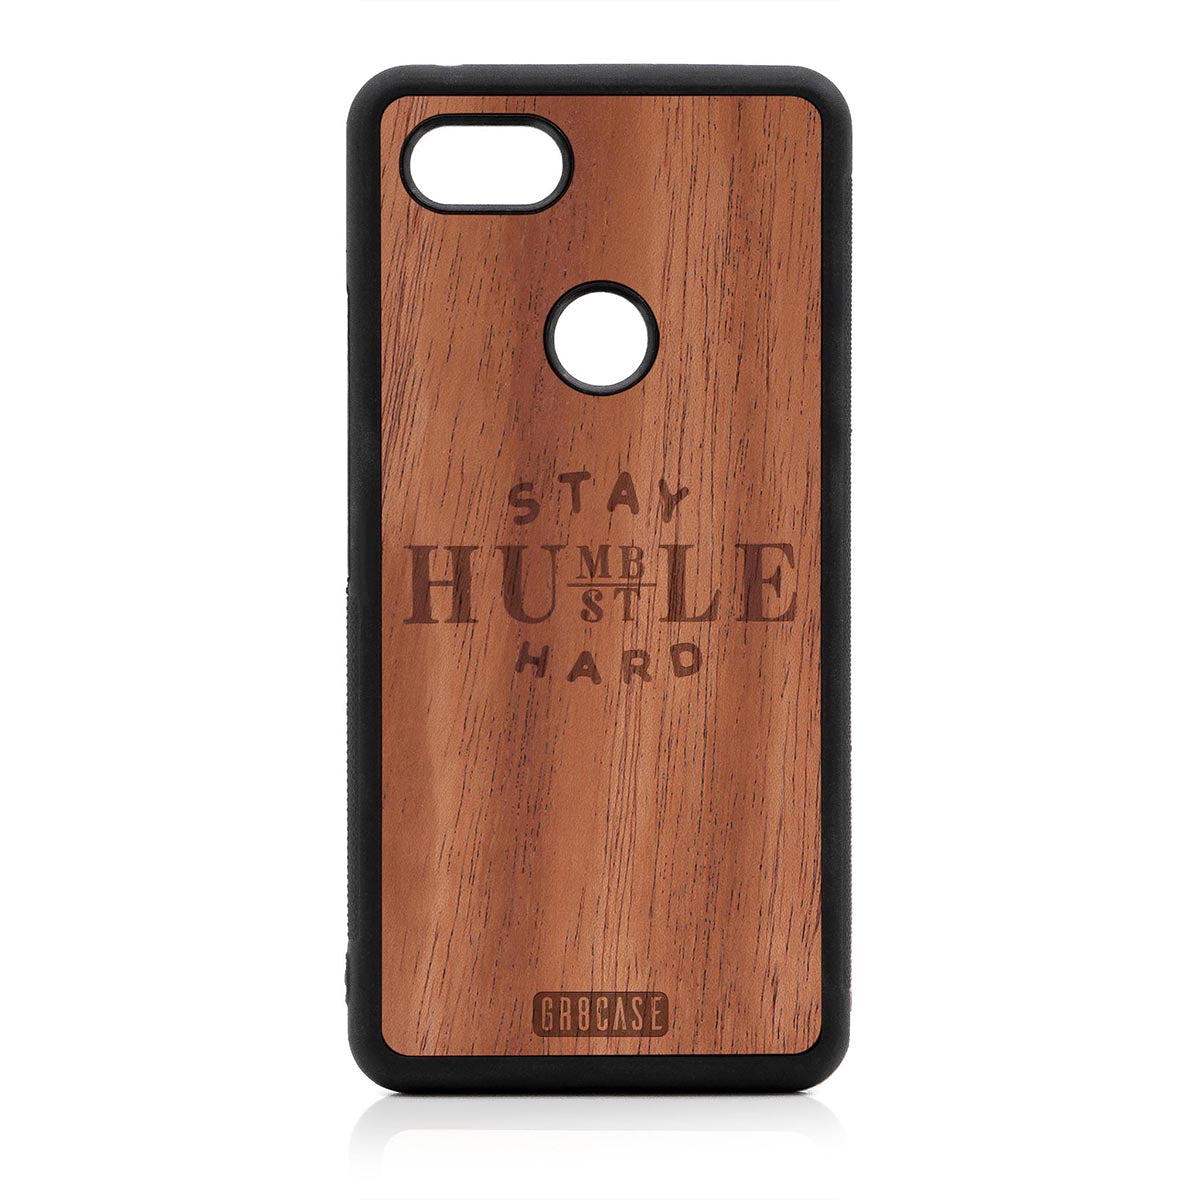 Stay Humble Hustle Hard Design Wood Case Google Pixel 3 XL by GR8CASE